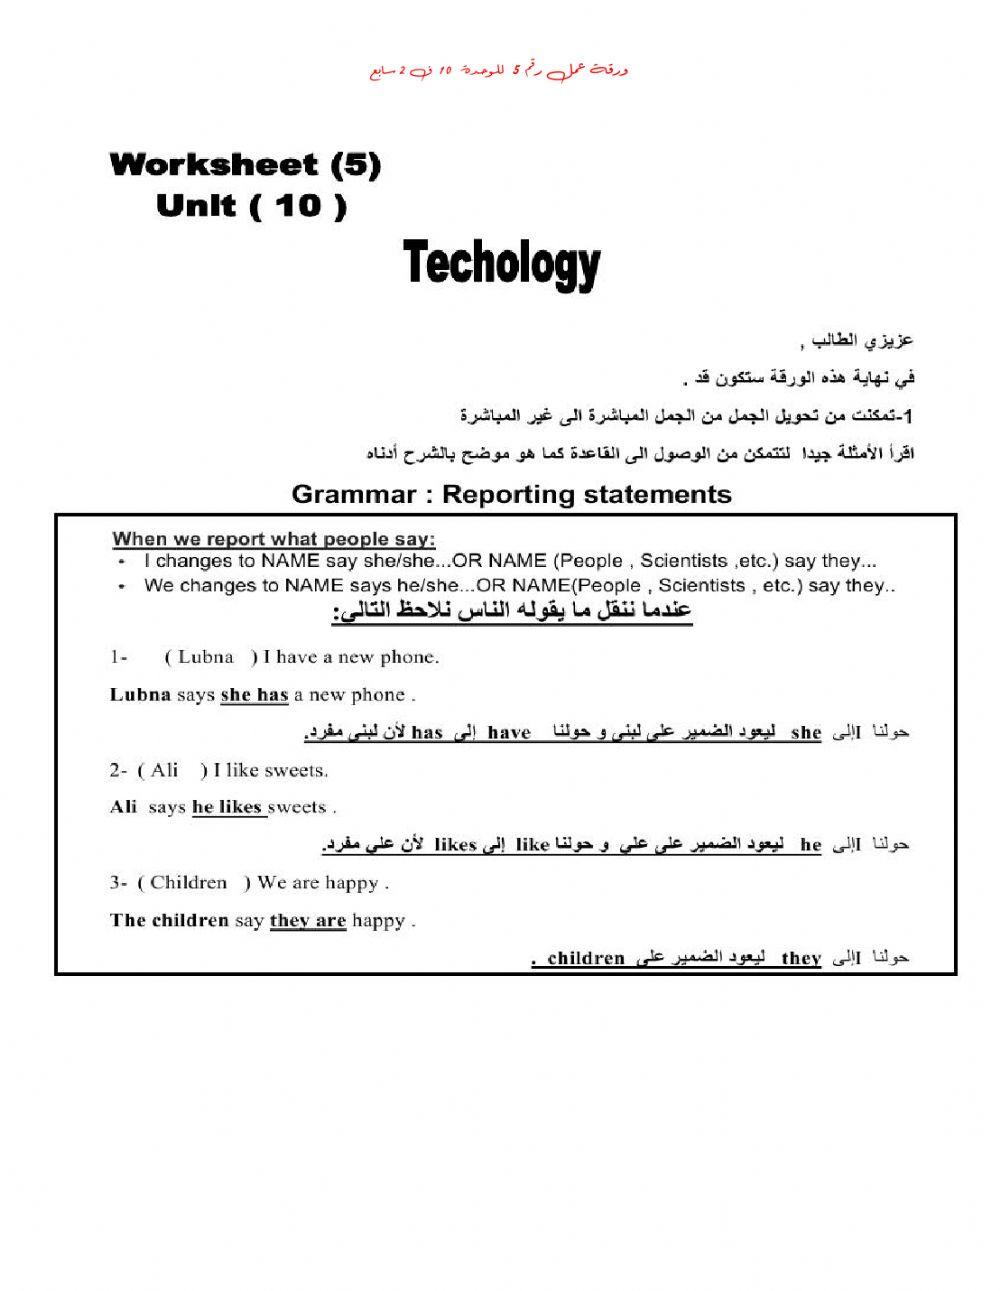 WorkSheet 5 Unit 10 T2 G7